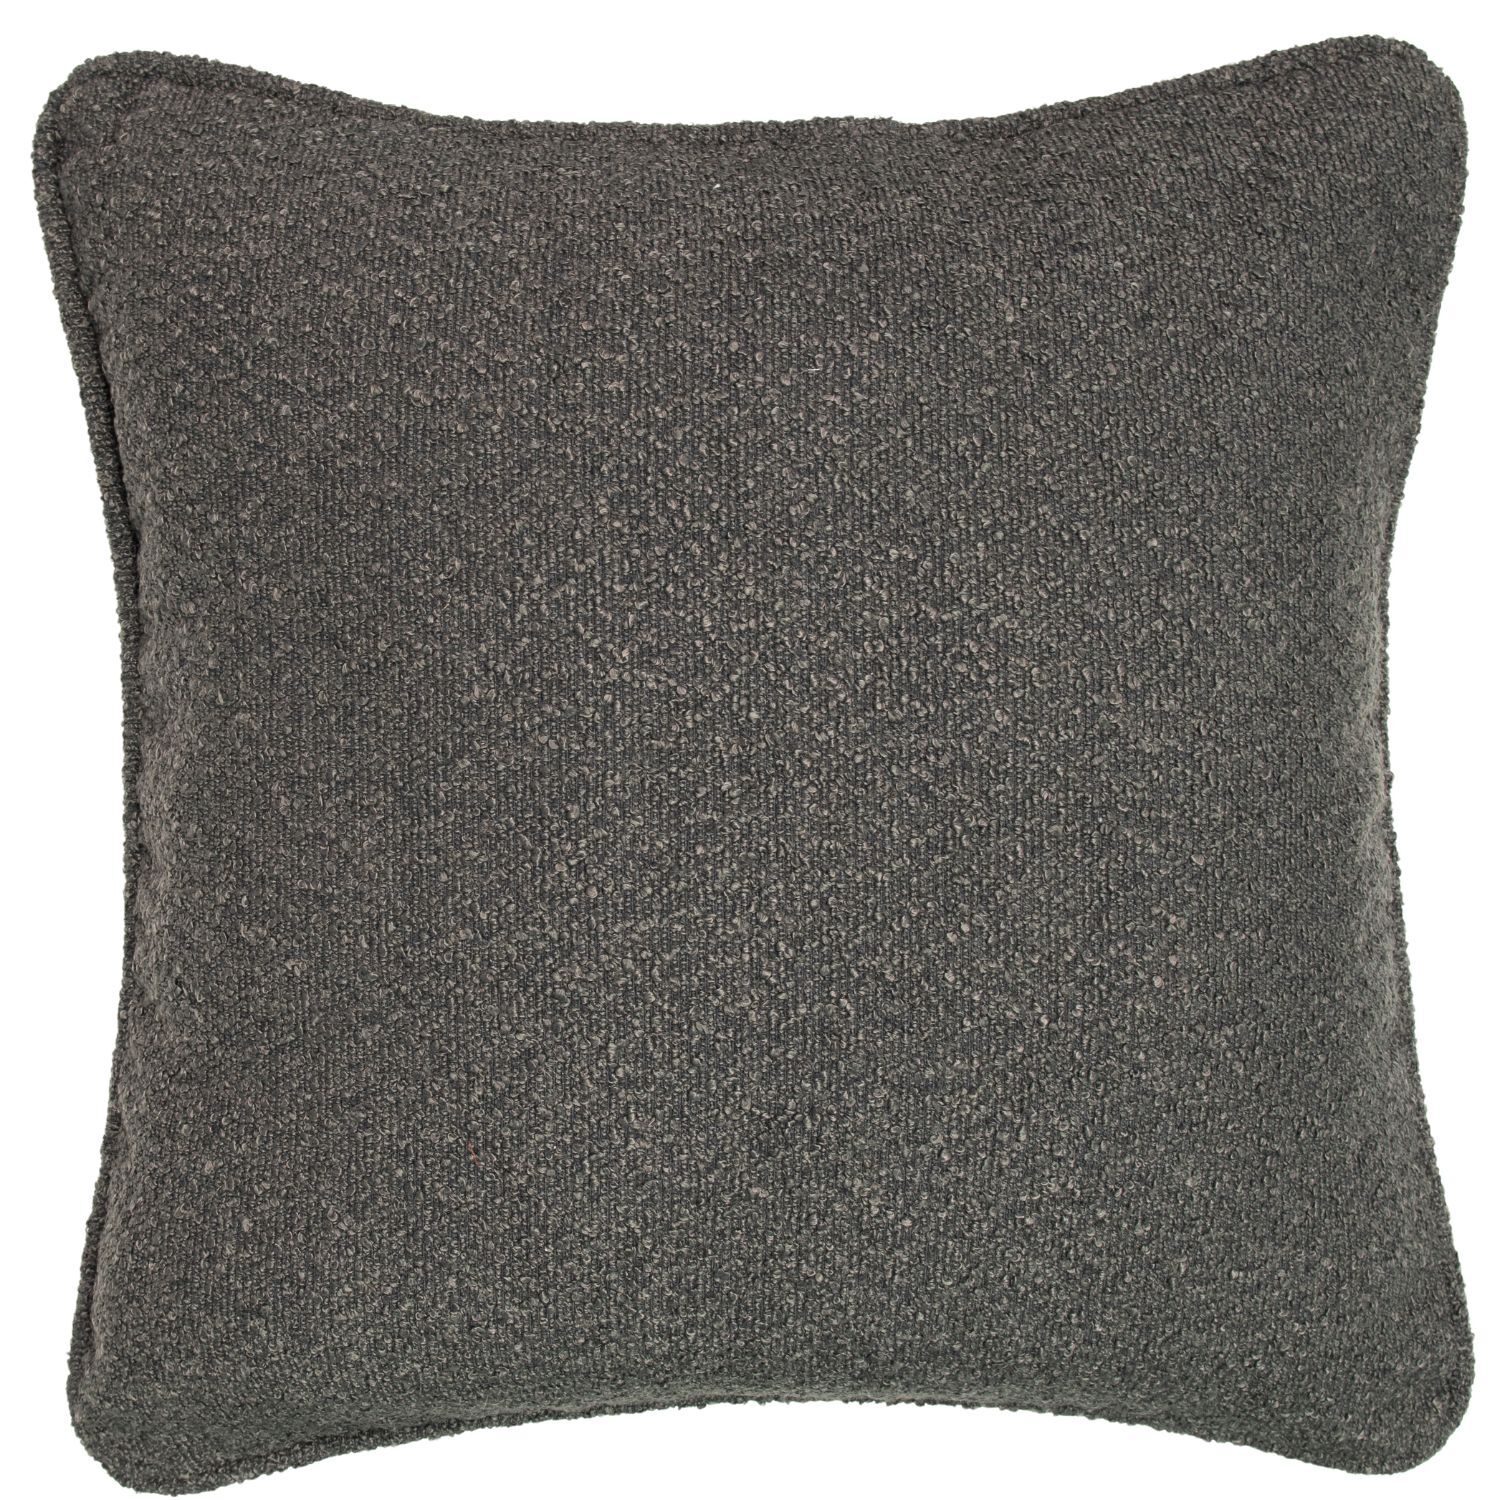 Boucle Charcoal European Pillowcase